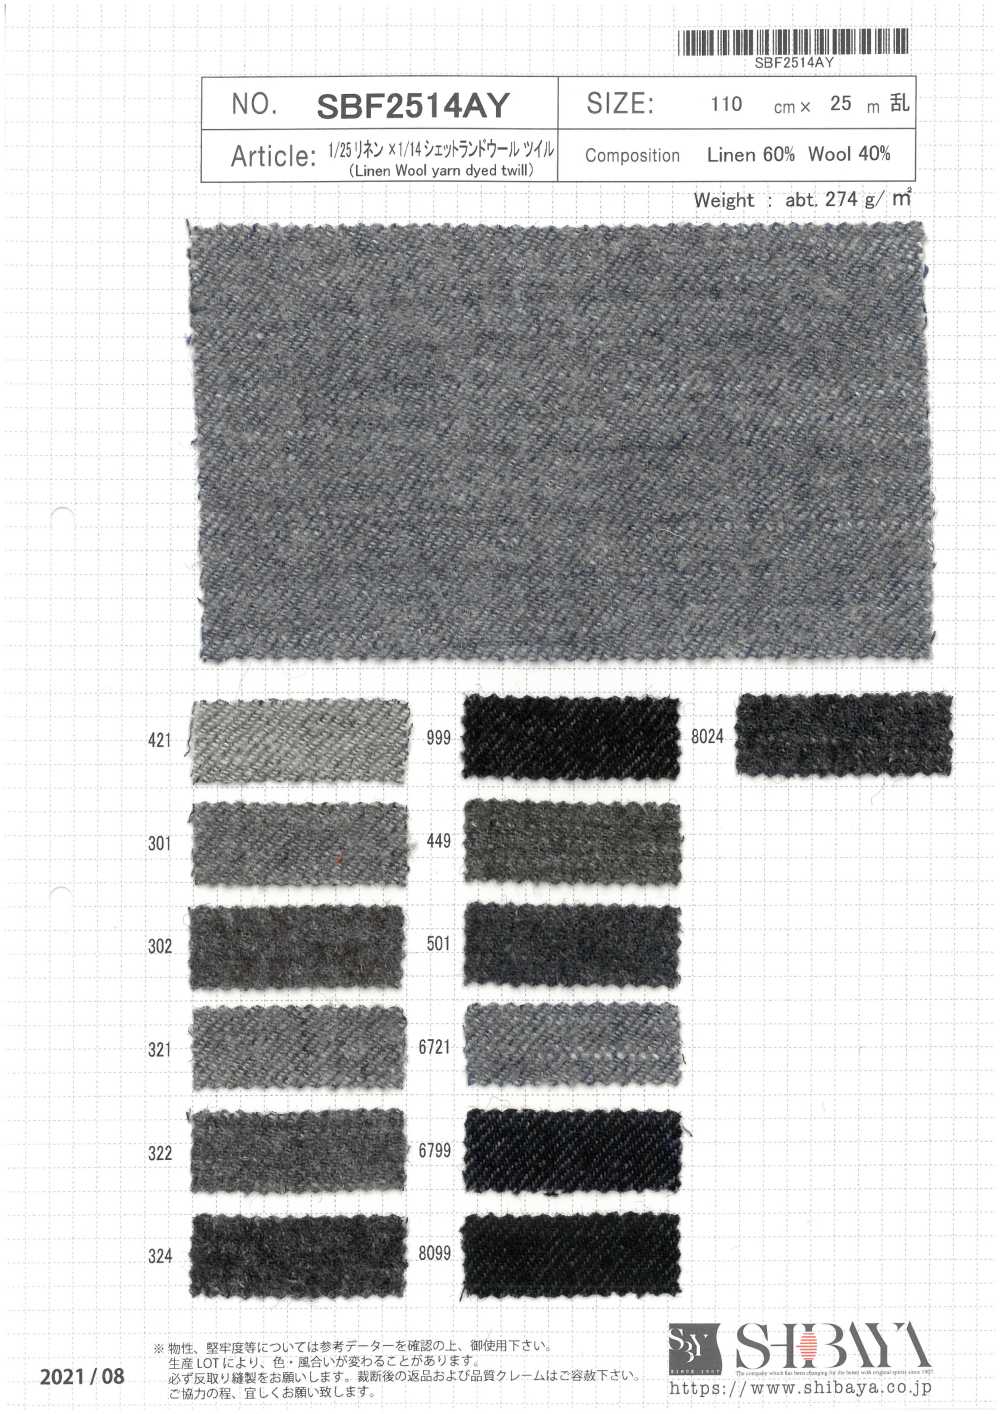 SBF2514AY 1/25 Linho X 1/14 Sarja De Lã Shetland[Têxtil / Tecido] SHIBAYA